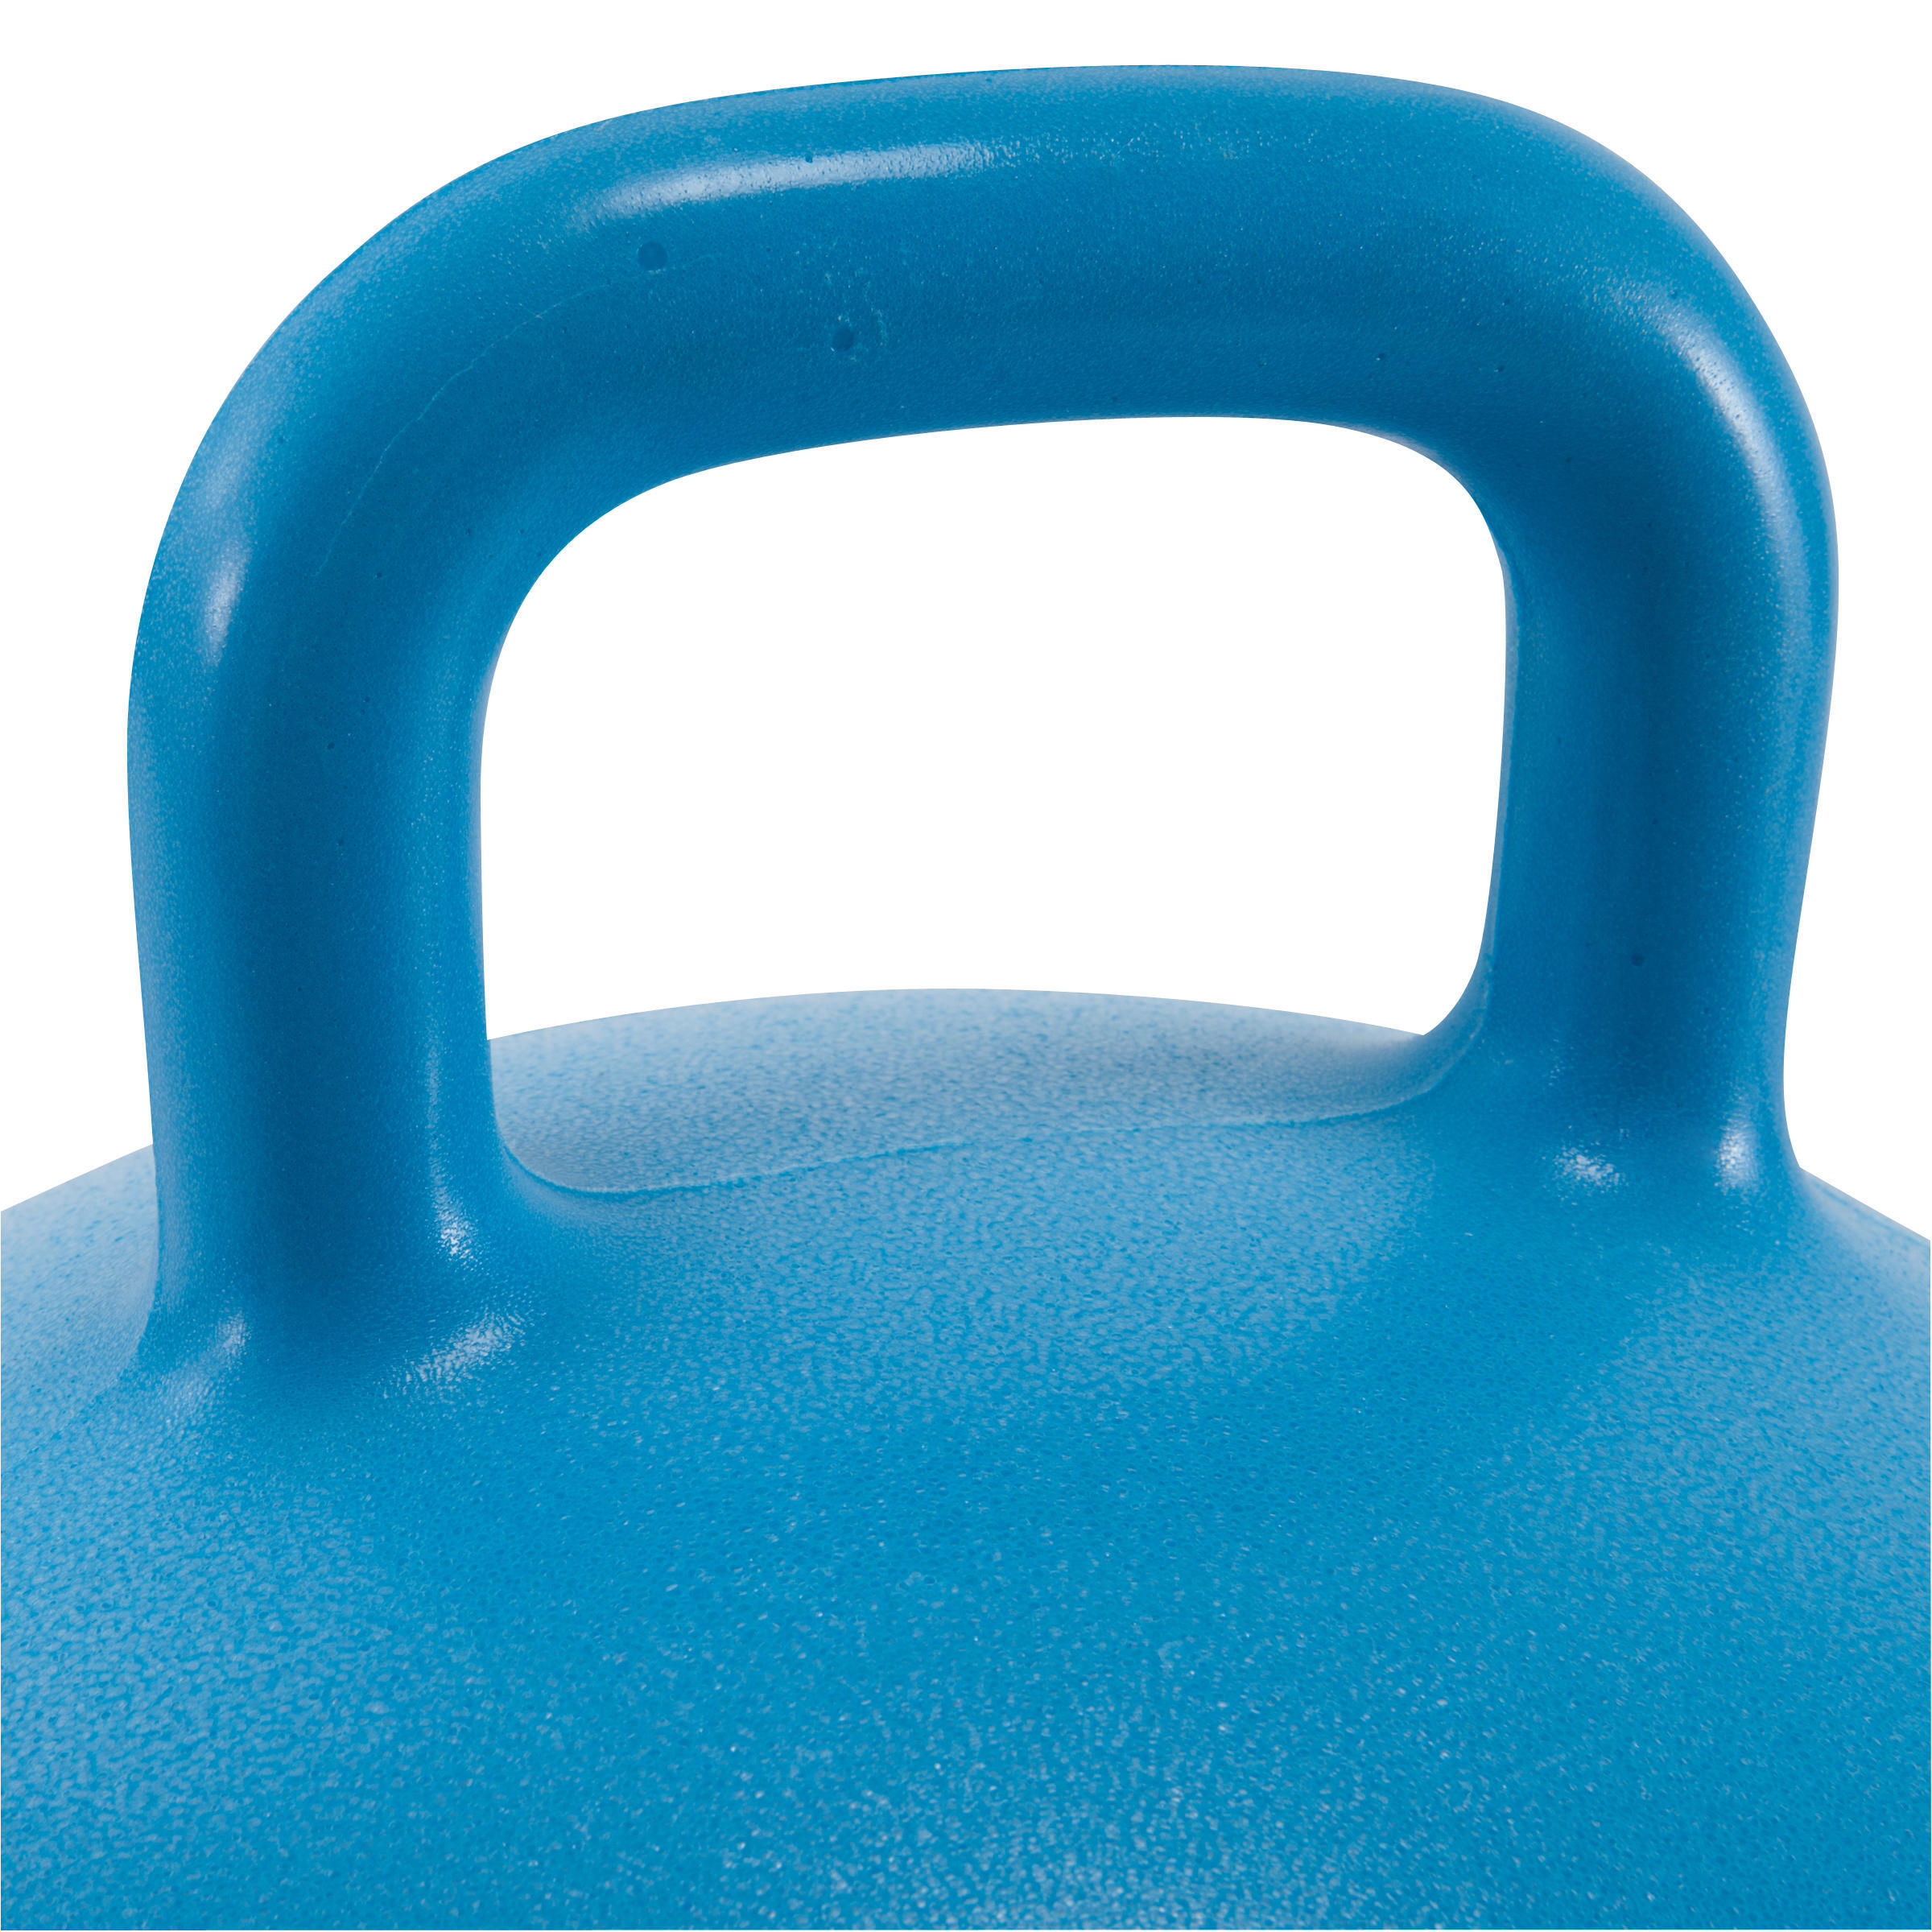 Kids' Gym Hopper Ball Resist 45 cm - Blue 4/8